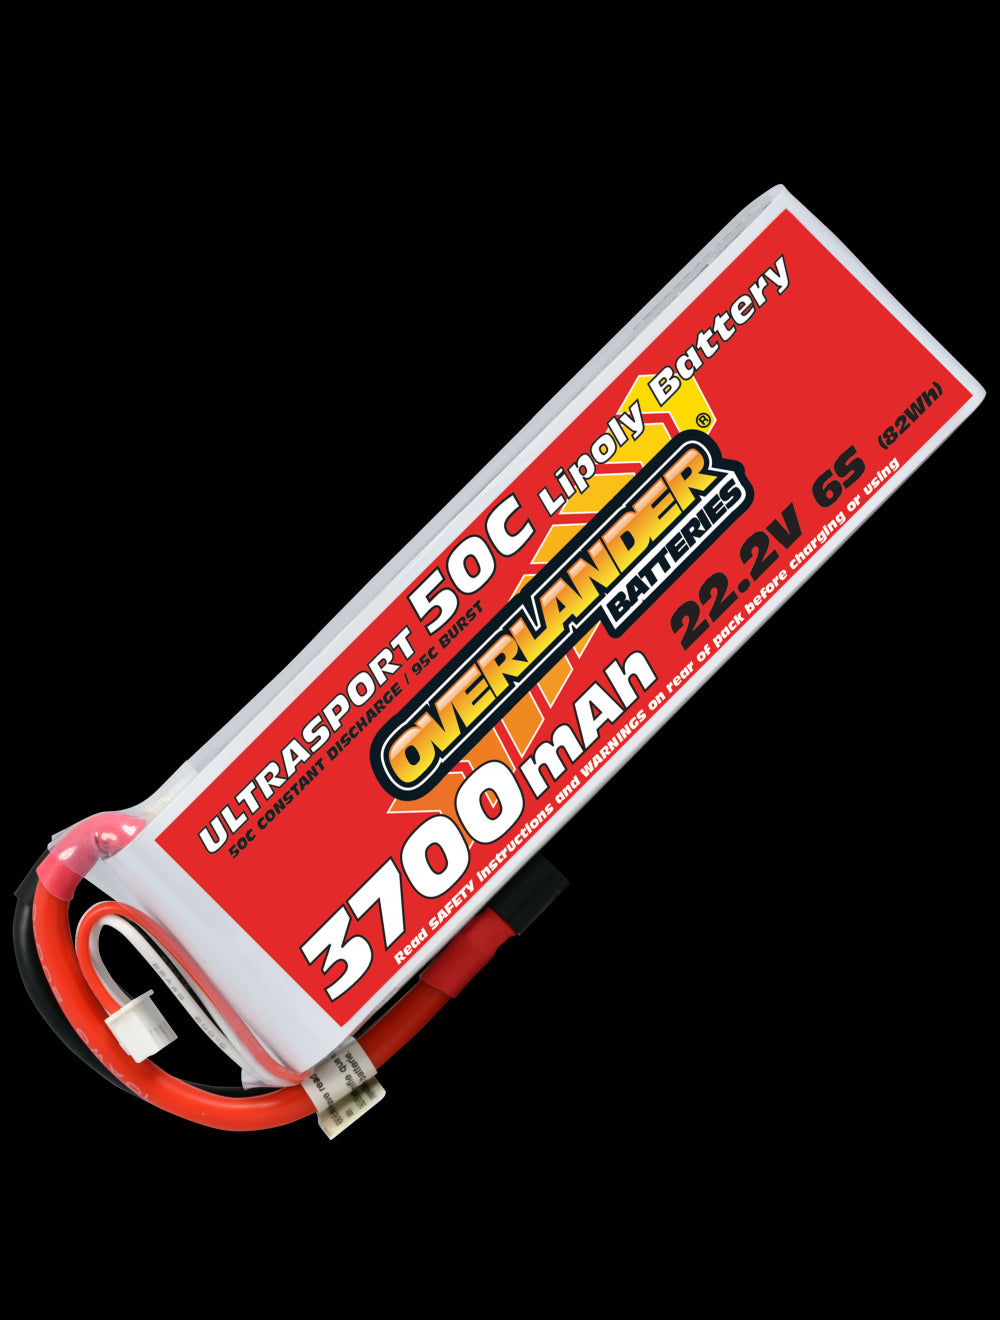 Overlander 3700mAh 22.2V 6S 50C Ultrasport LiPo Battery - EC3 Connectors 3226